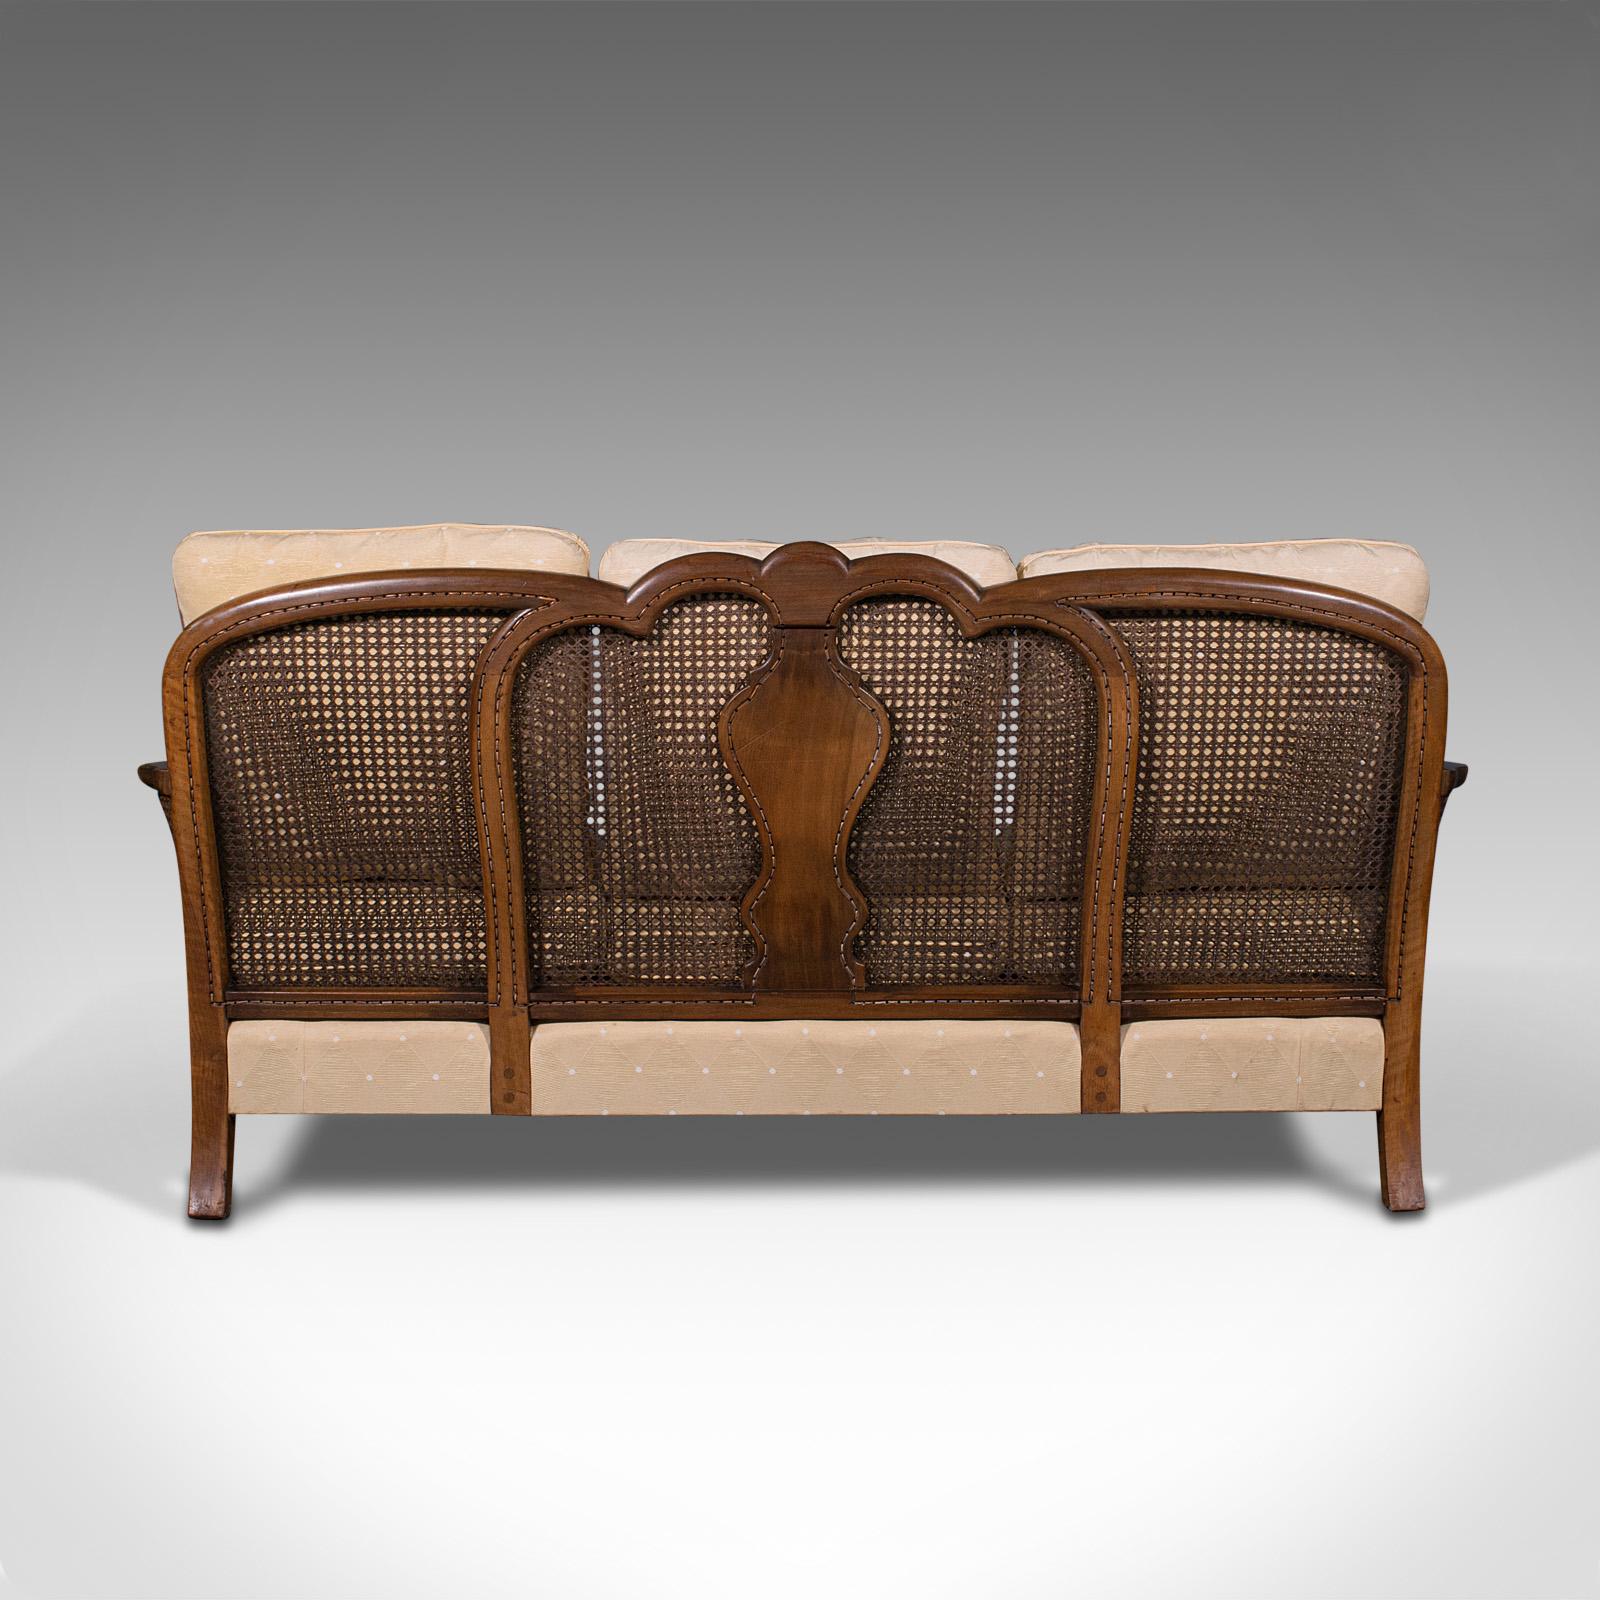 20th Century Antique Bergere Sofa, English, Walnut, Cane, 3 Seat, Settee, Art Deco, Edwardian